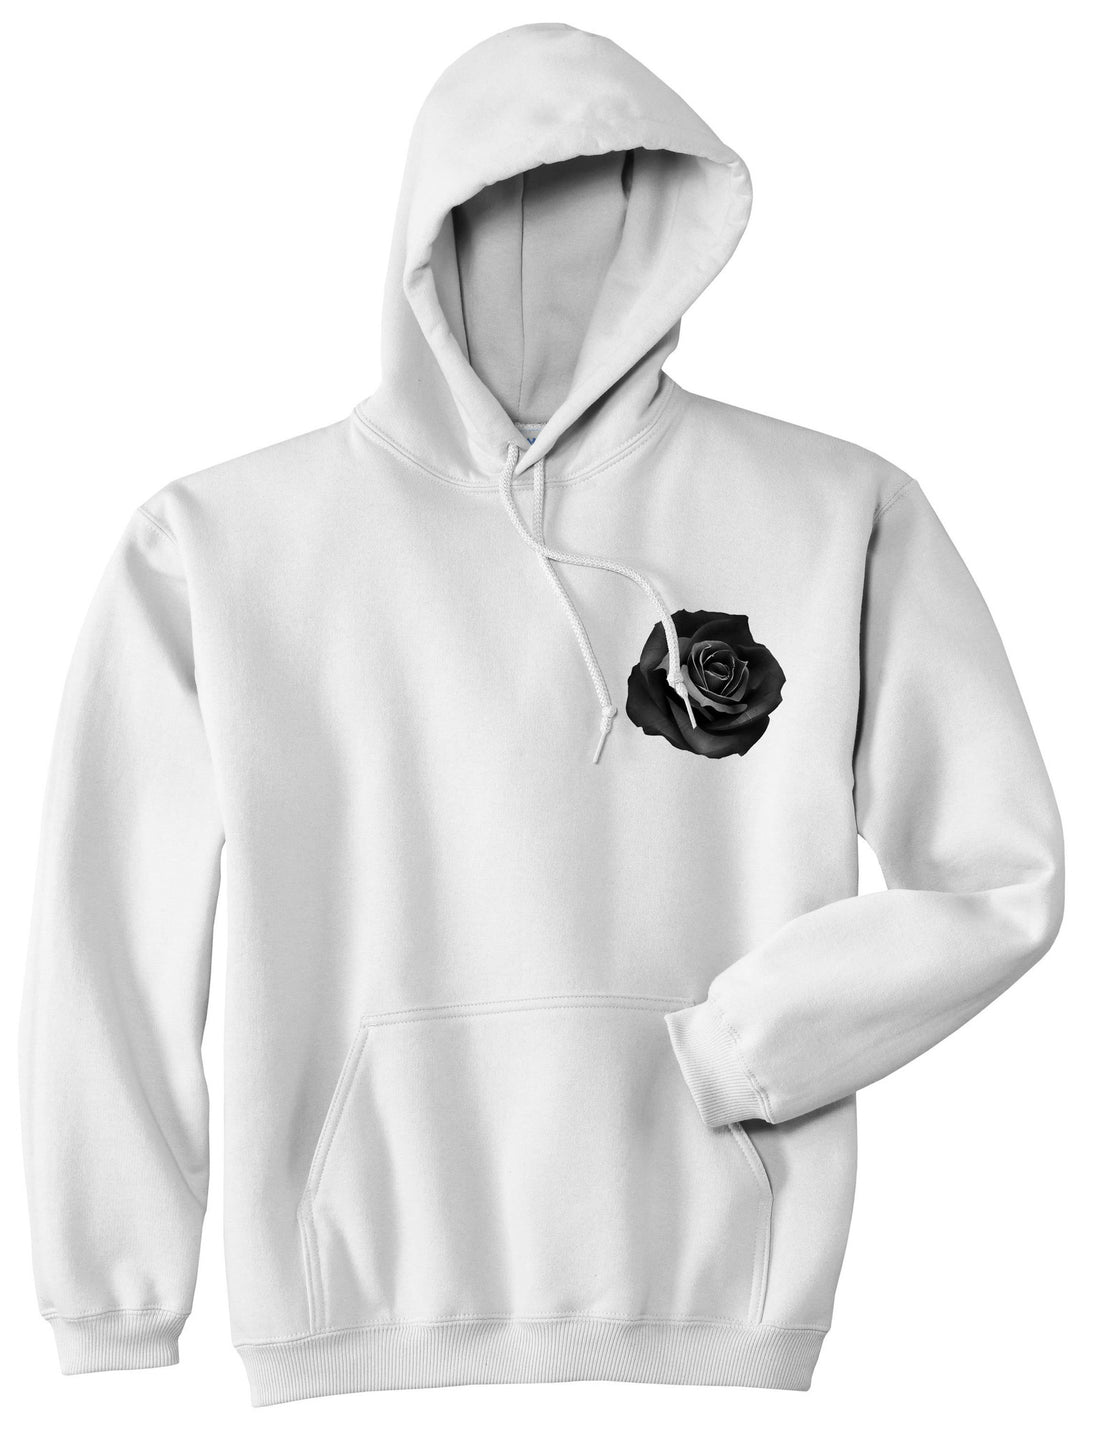 Black Noir Rose Flower Chest Logo Boys Kids Pullover Hoodie Hoody in White By Kings Of NY